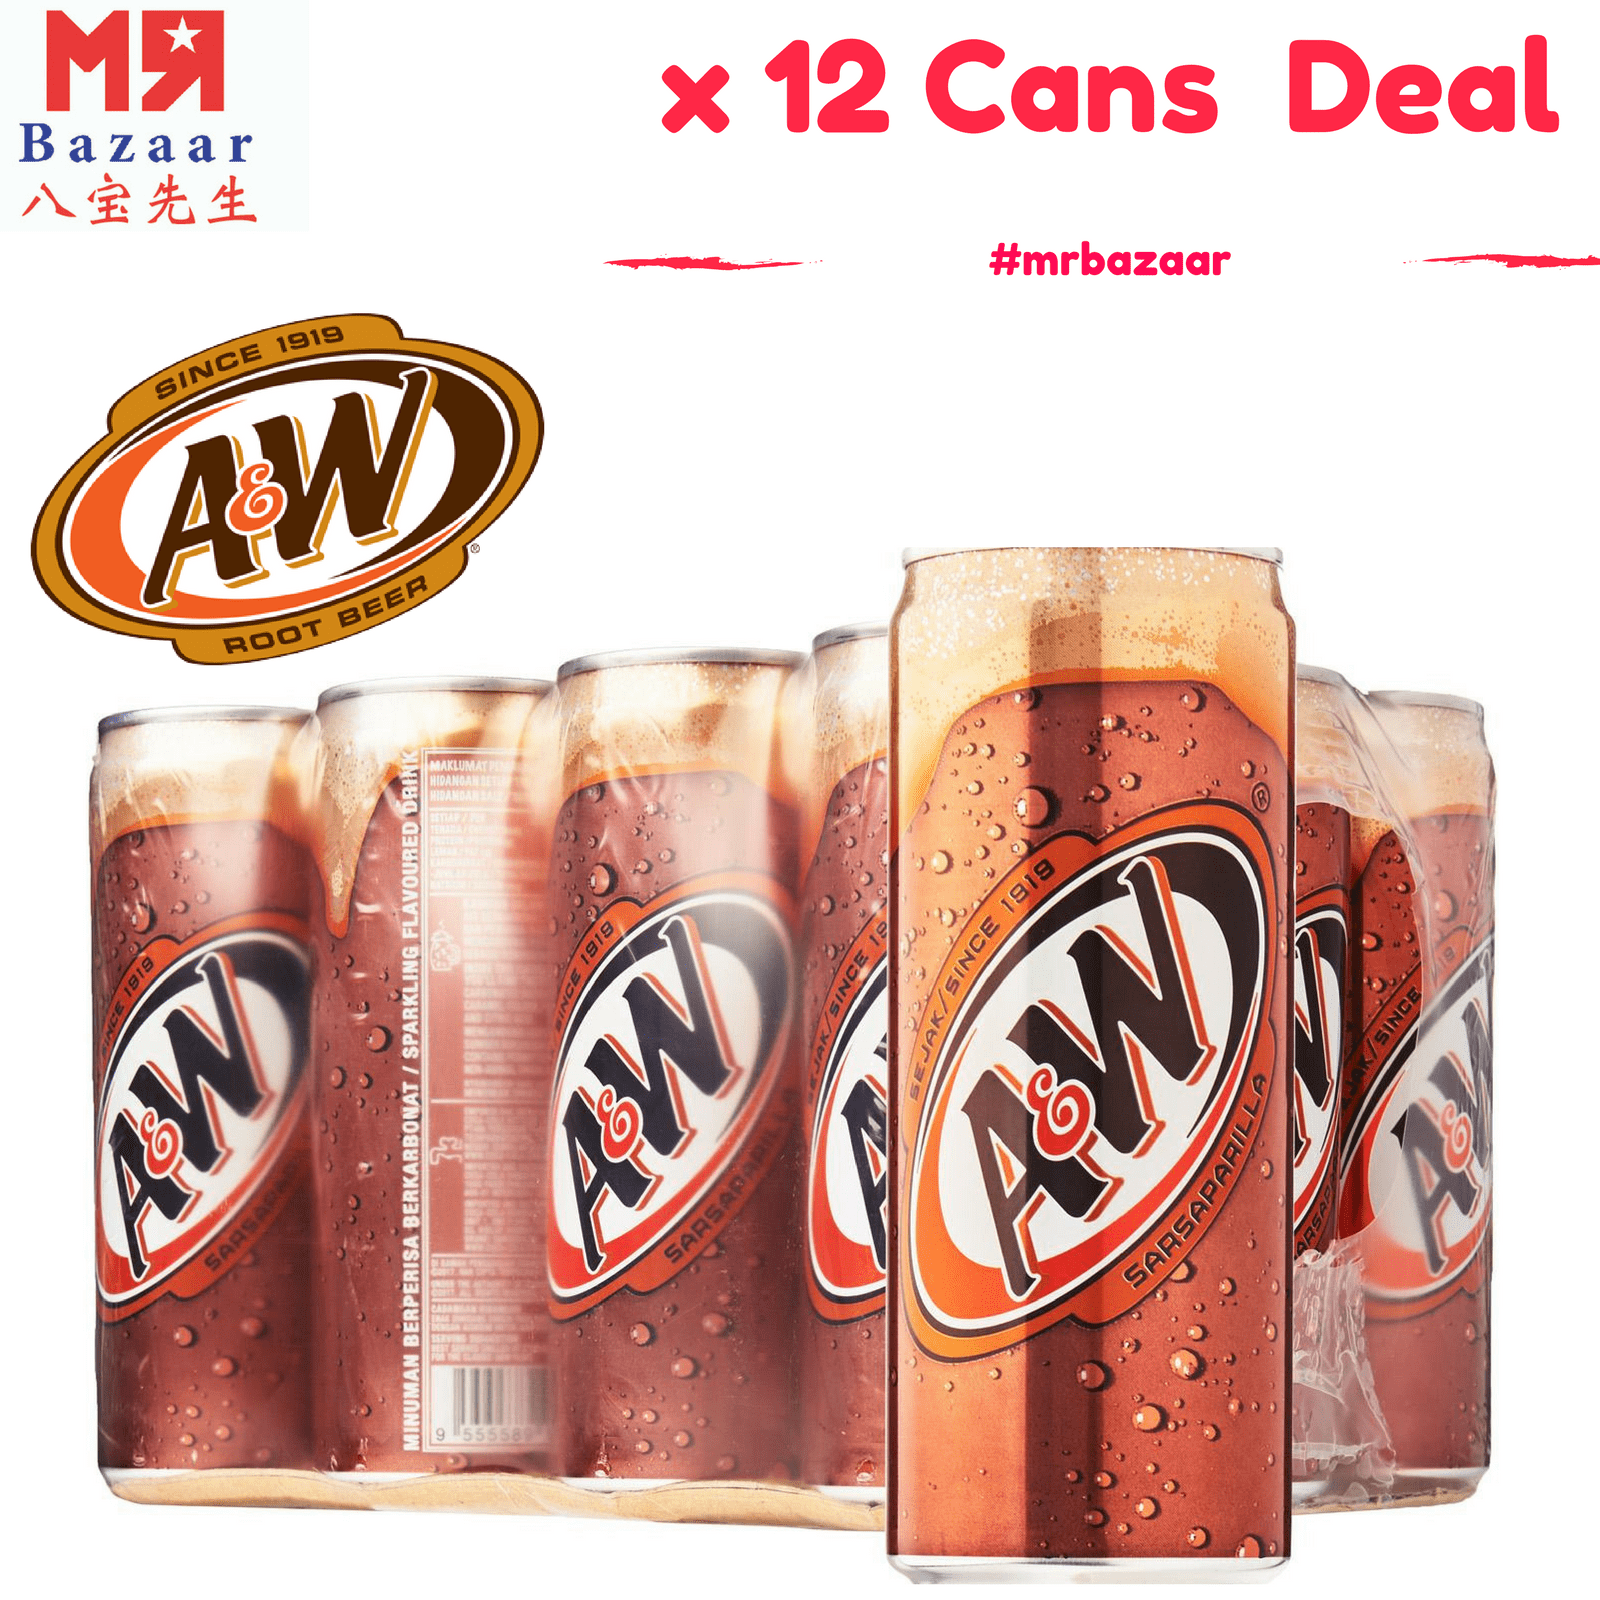 A&W Sarsaparilla Root Beer (320ml) x 12 Cans Deal